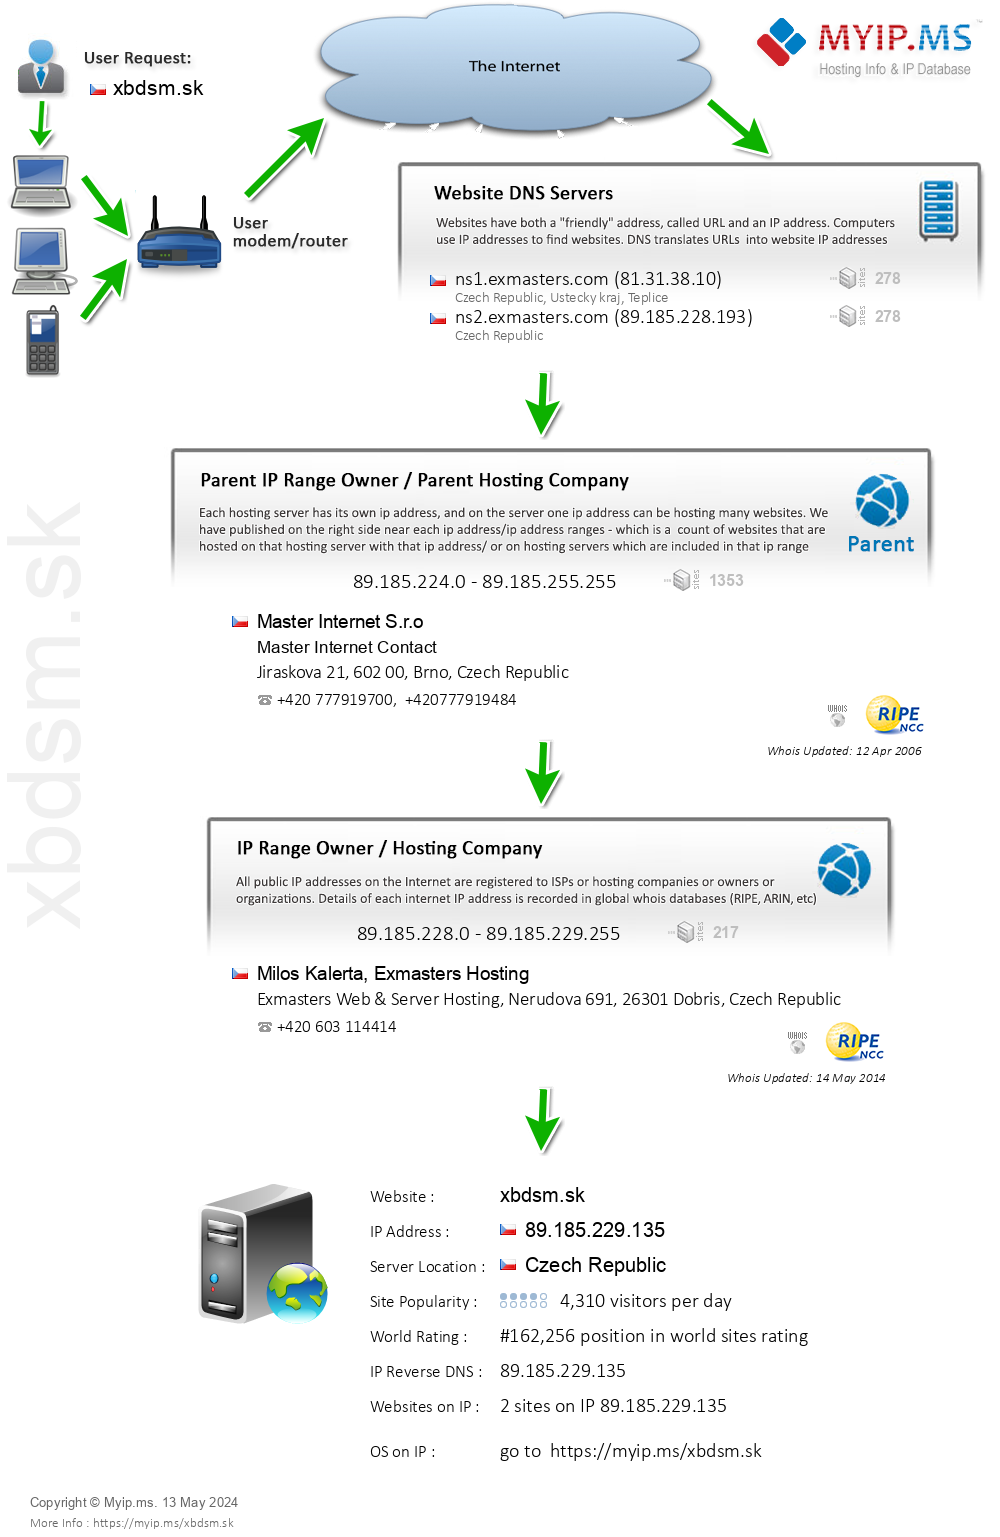 Xbdsm.sk - Website Hosting Visual IP Diagram